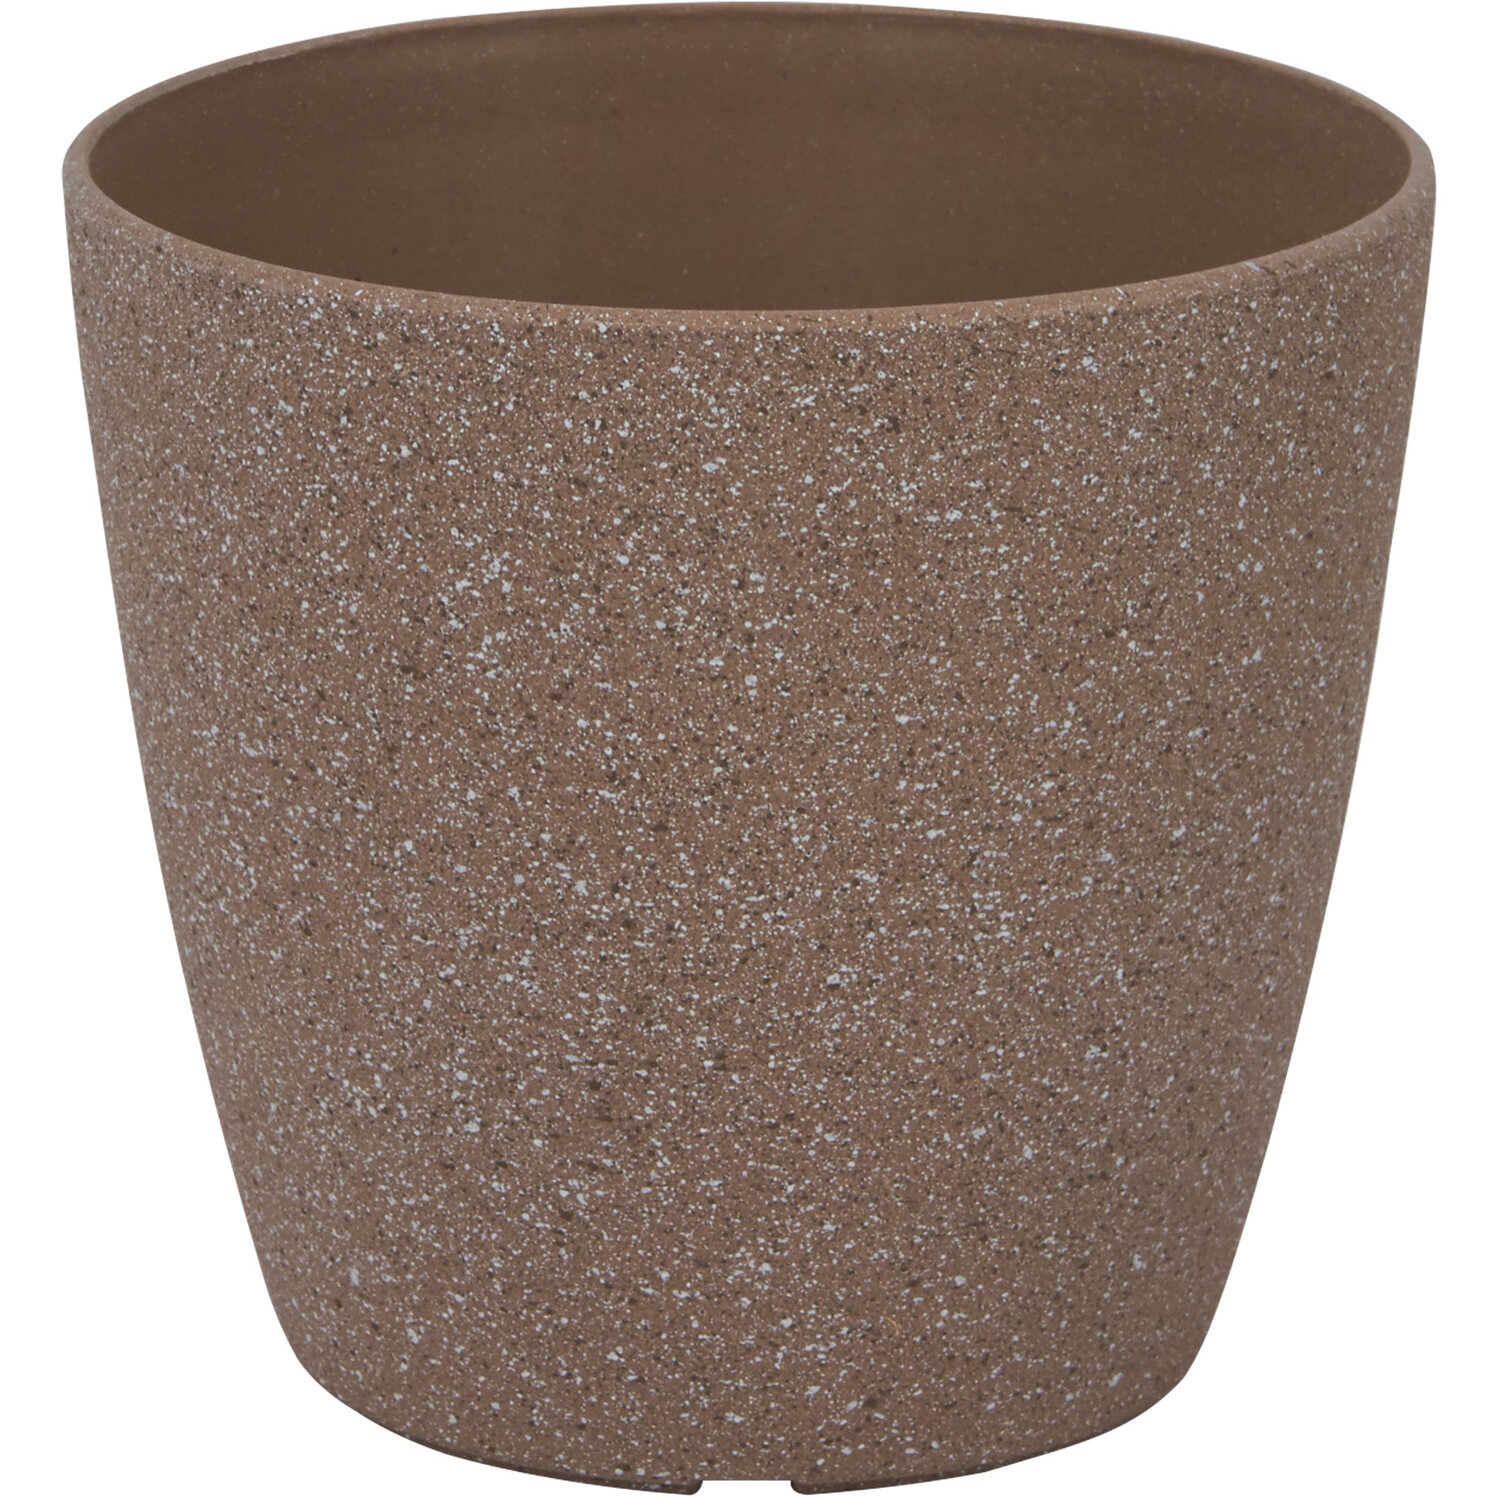 Sandstone Textured Plastic Plant Pot 17cm Image 1